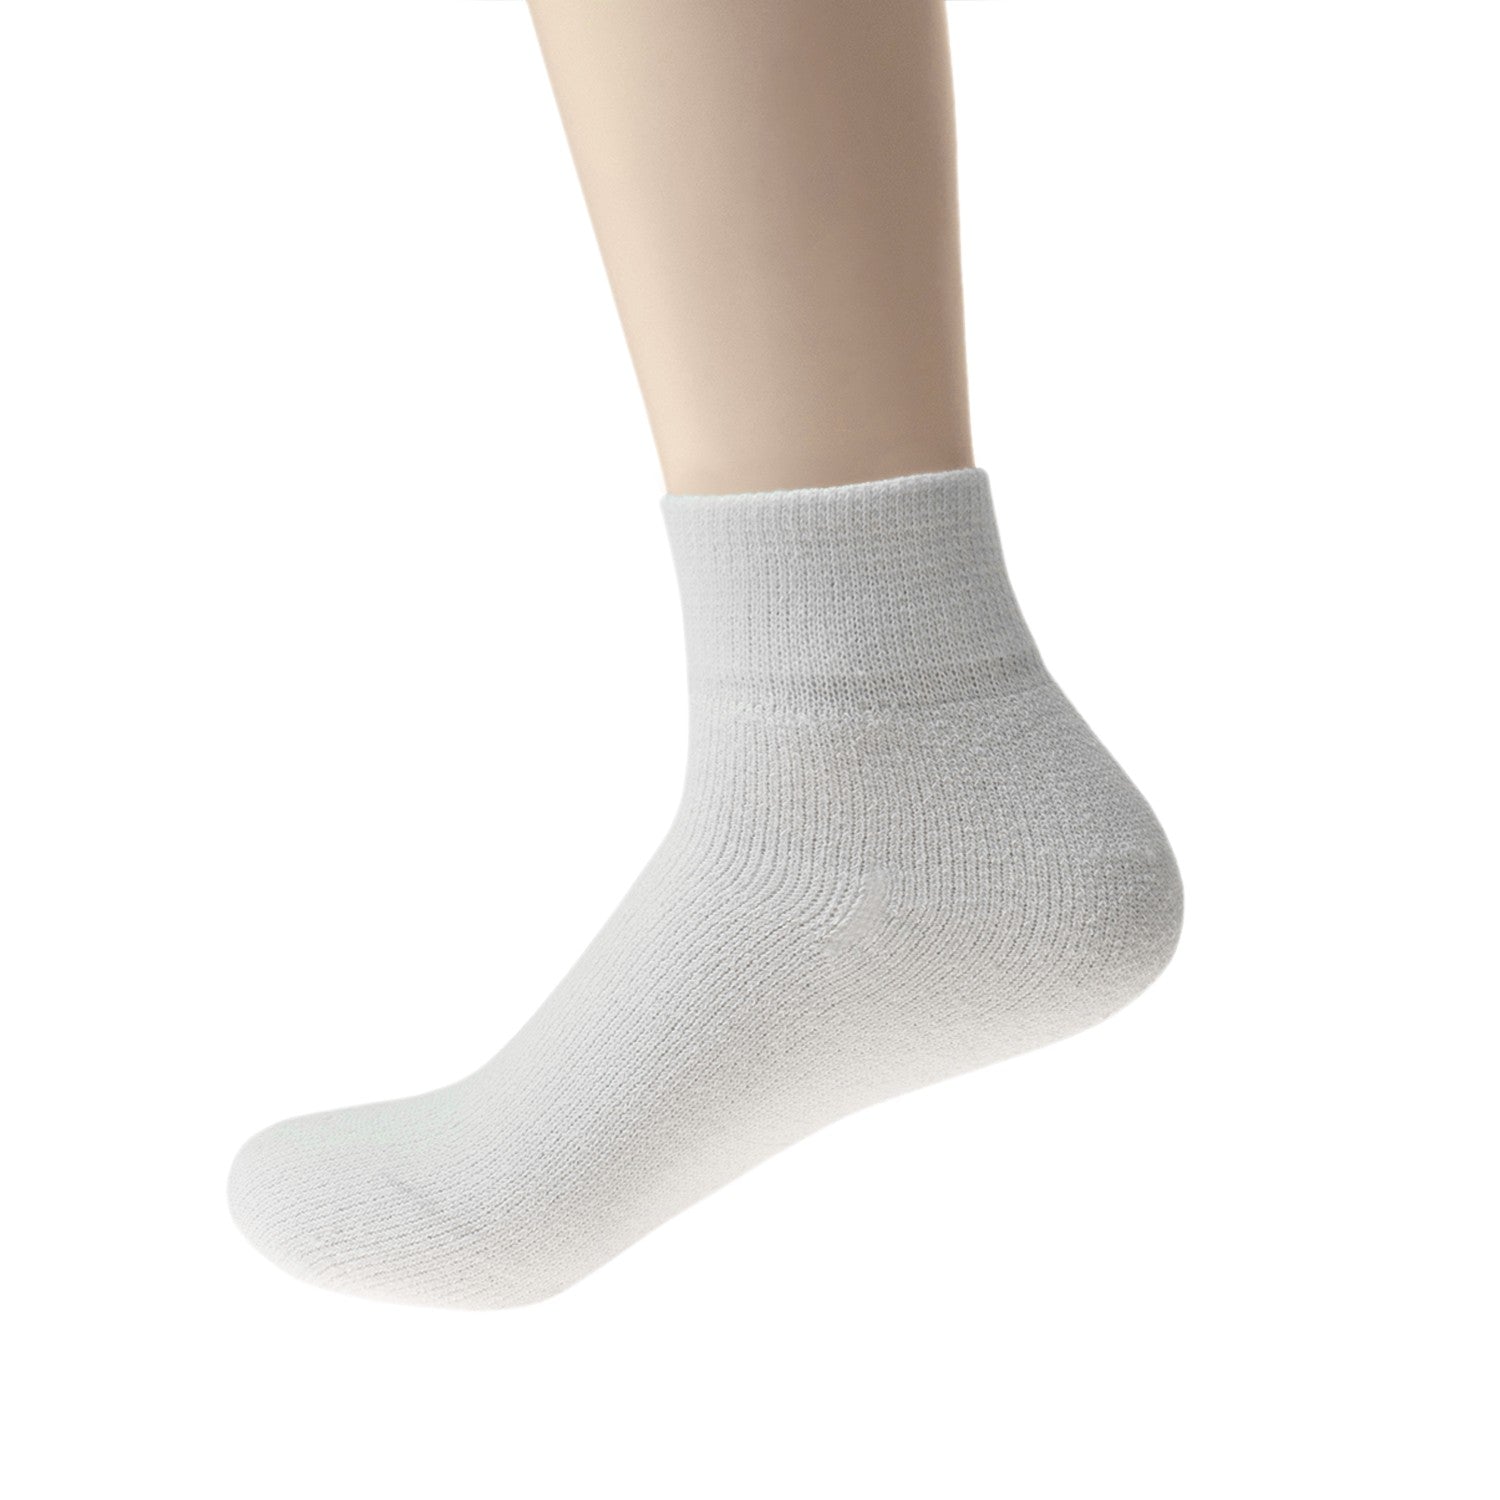 Wholesale Socks Men's Ankle Cut Athletic Size 10-13 in White - Bulk ...